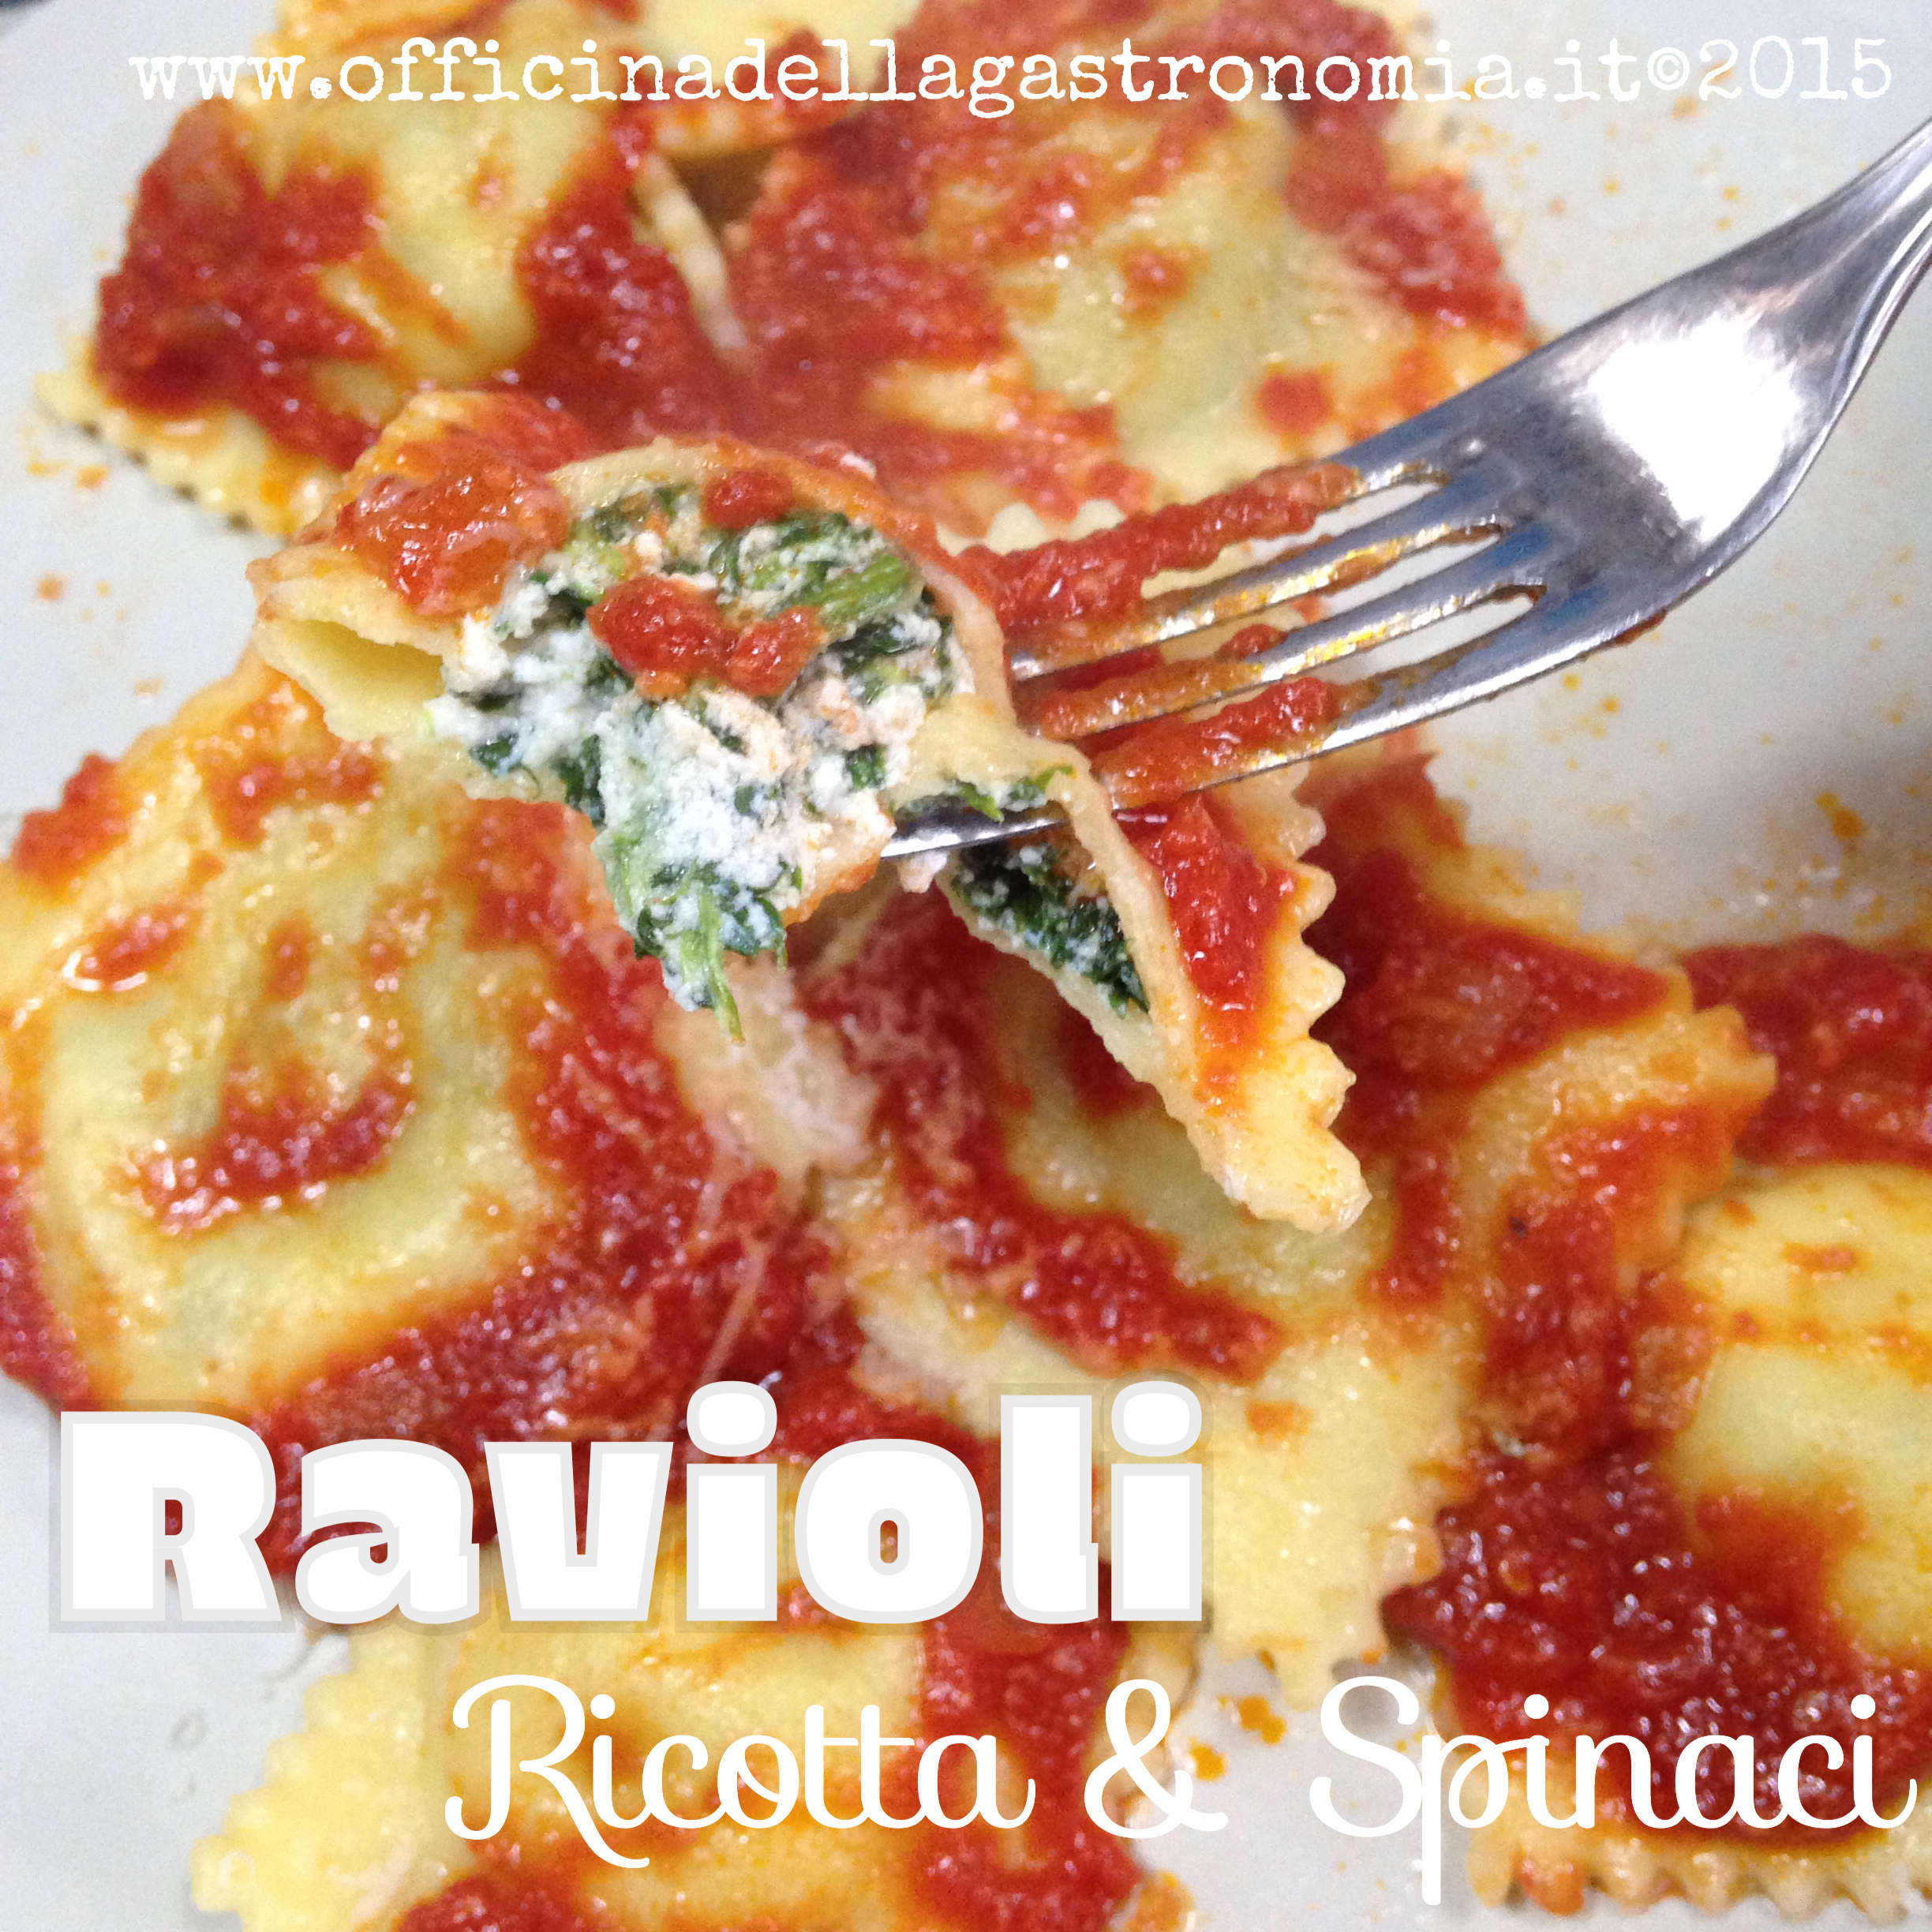 Ravioli Ricotta & Spinaci